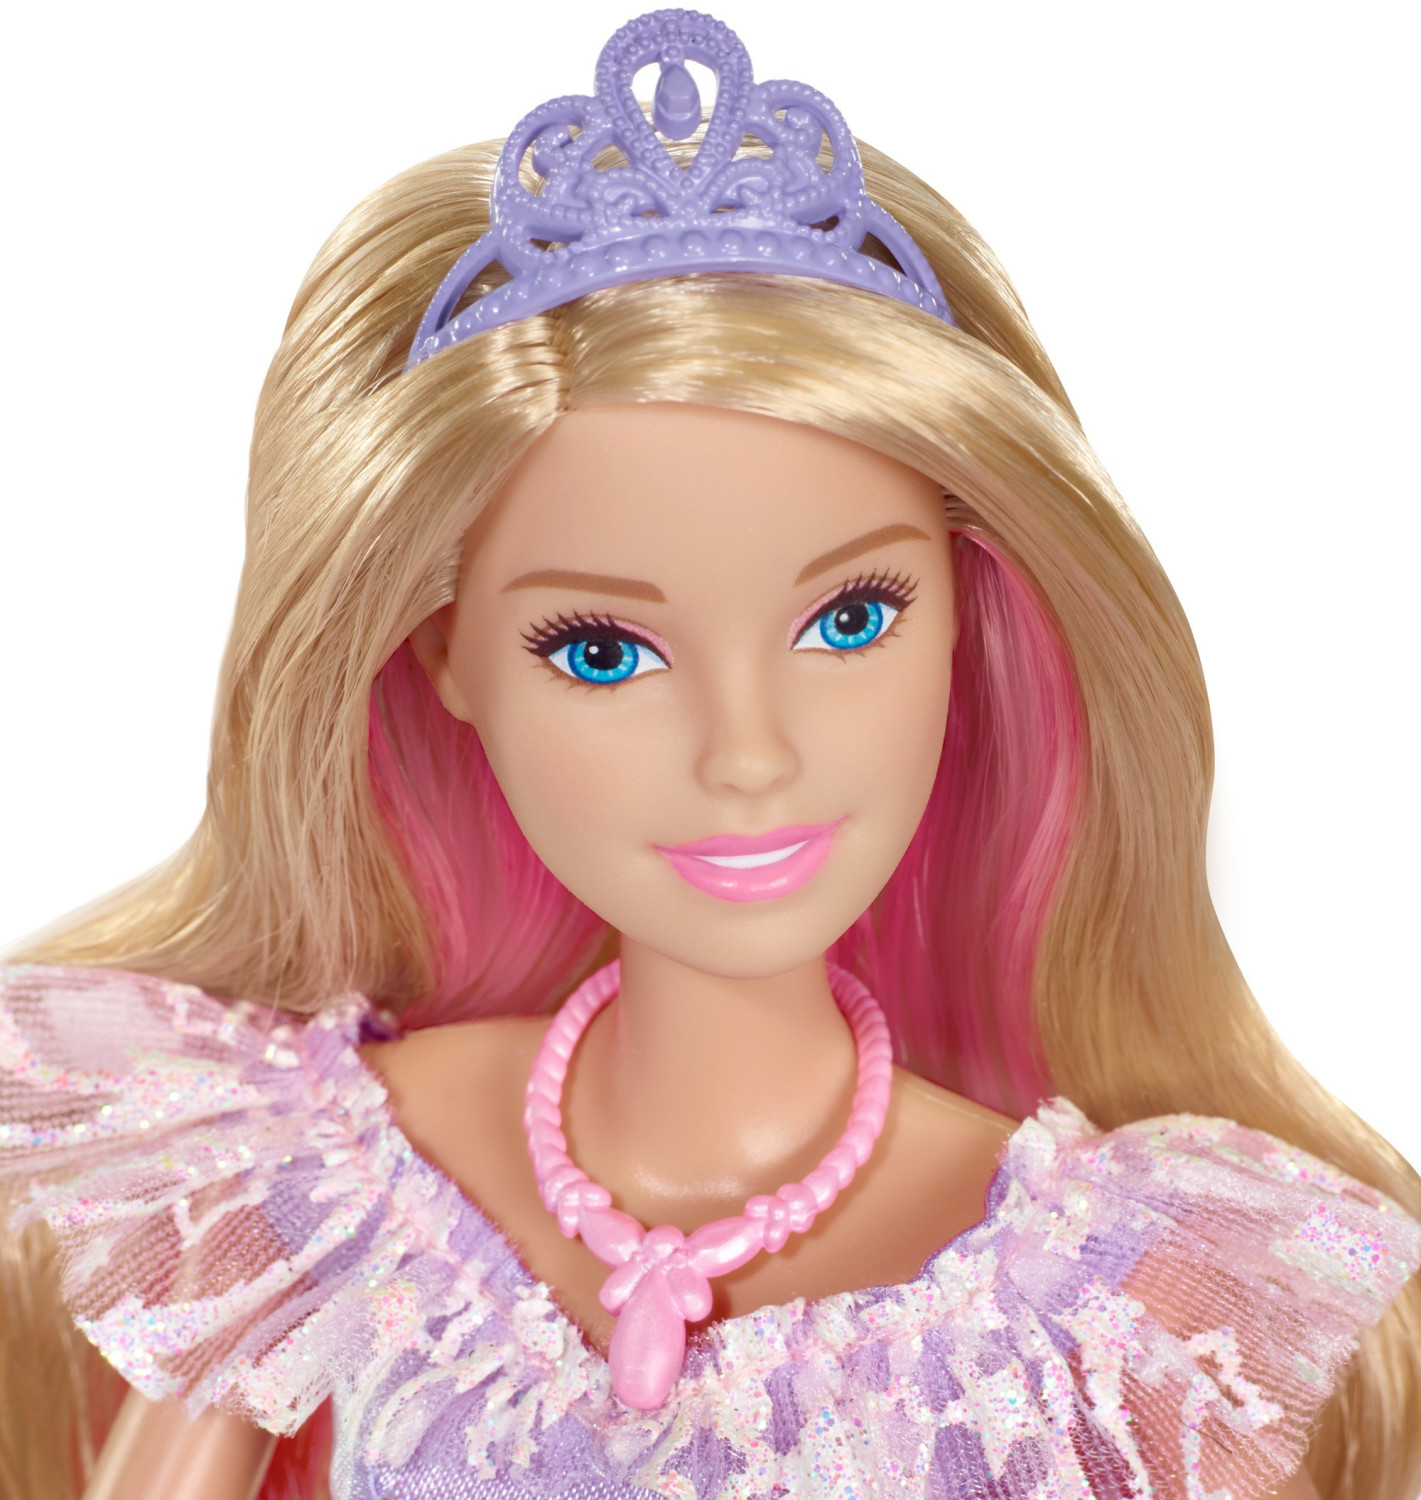 BARBIE Princesse Flocons - Barbie Dreamtopia pas cher 